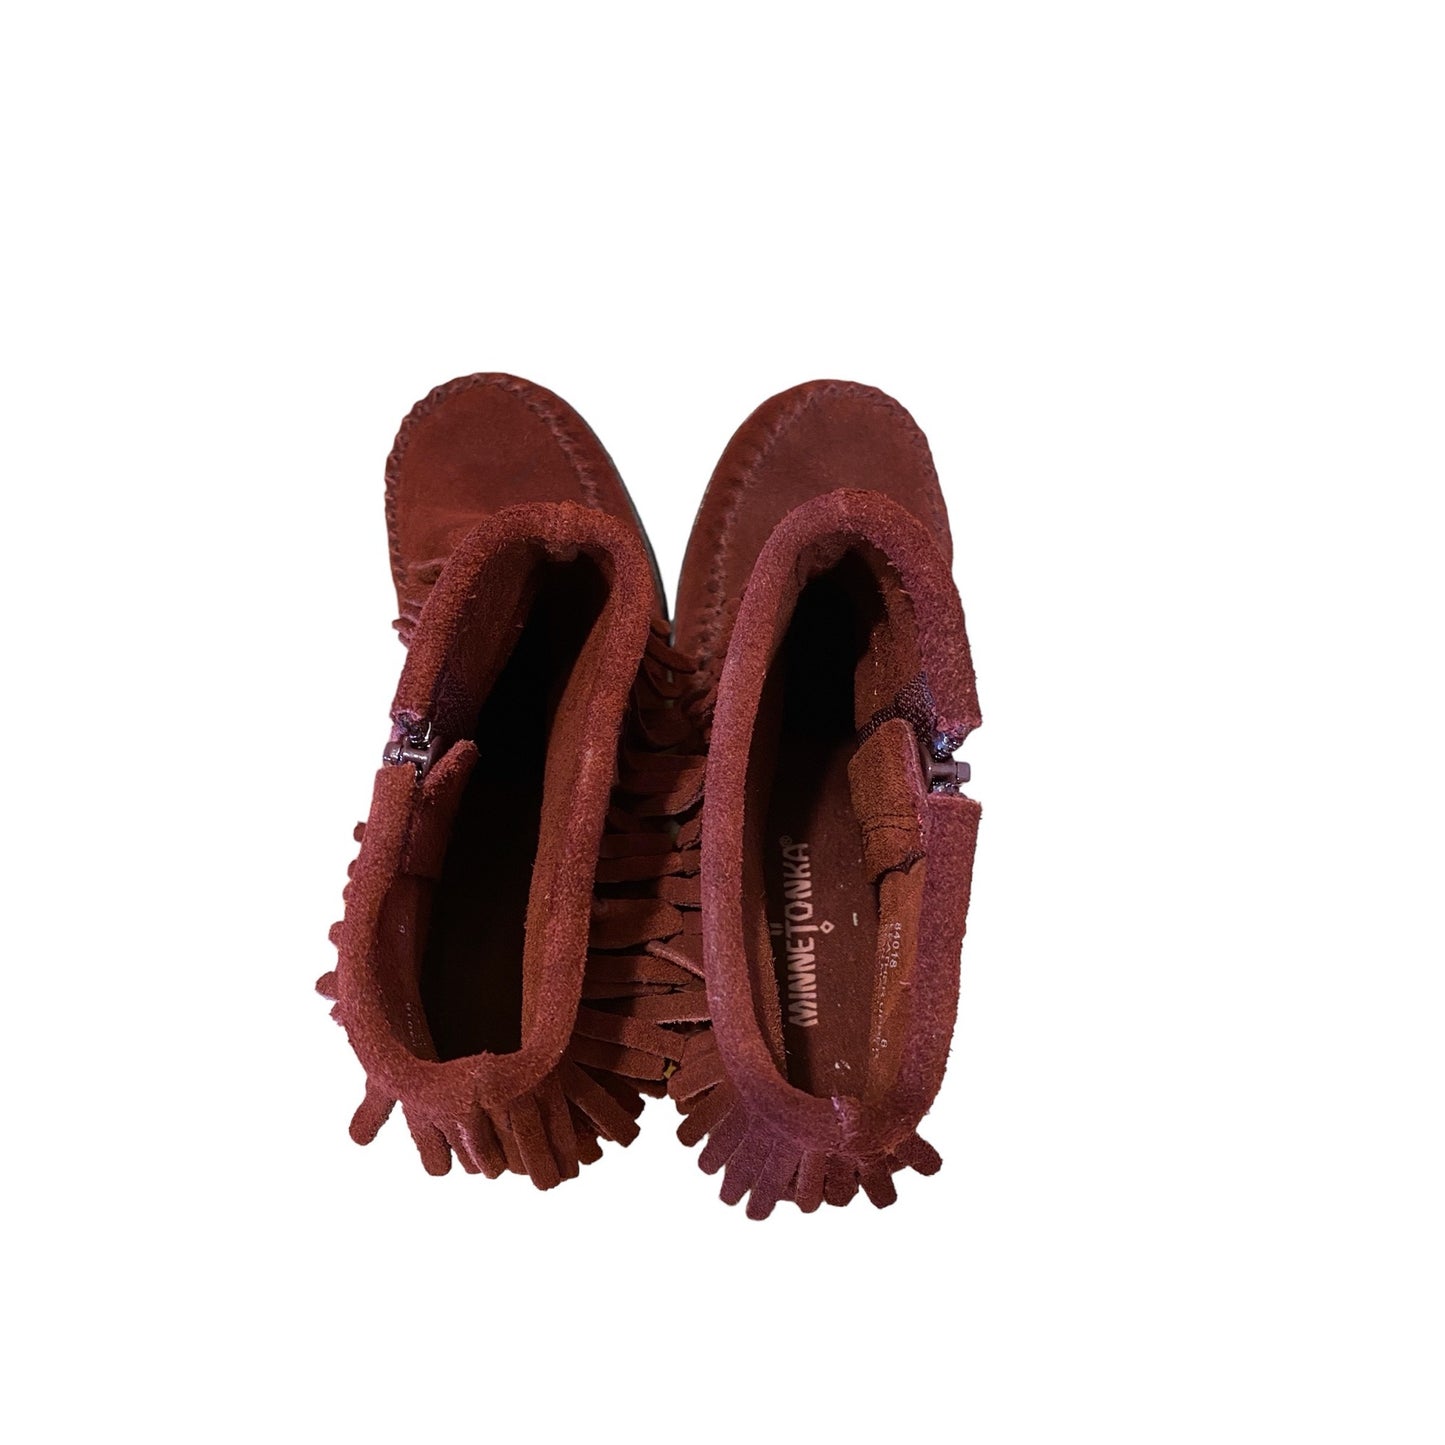 Minnetonka women's leather-fringe heeled boots